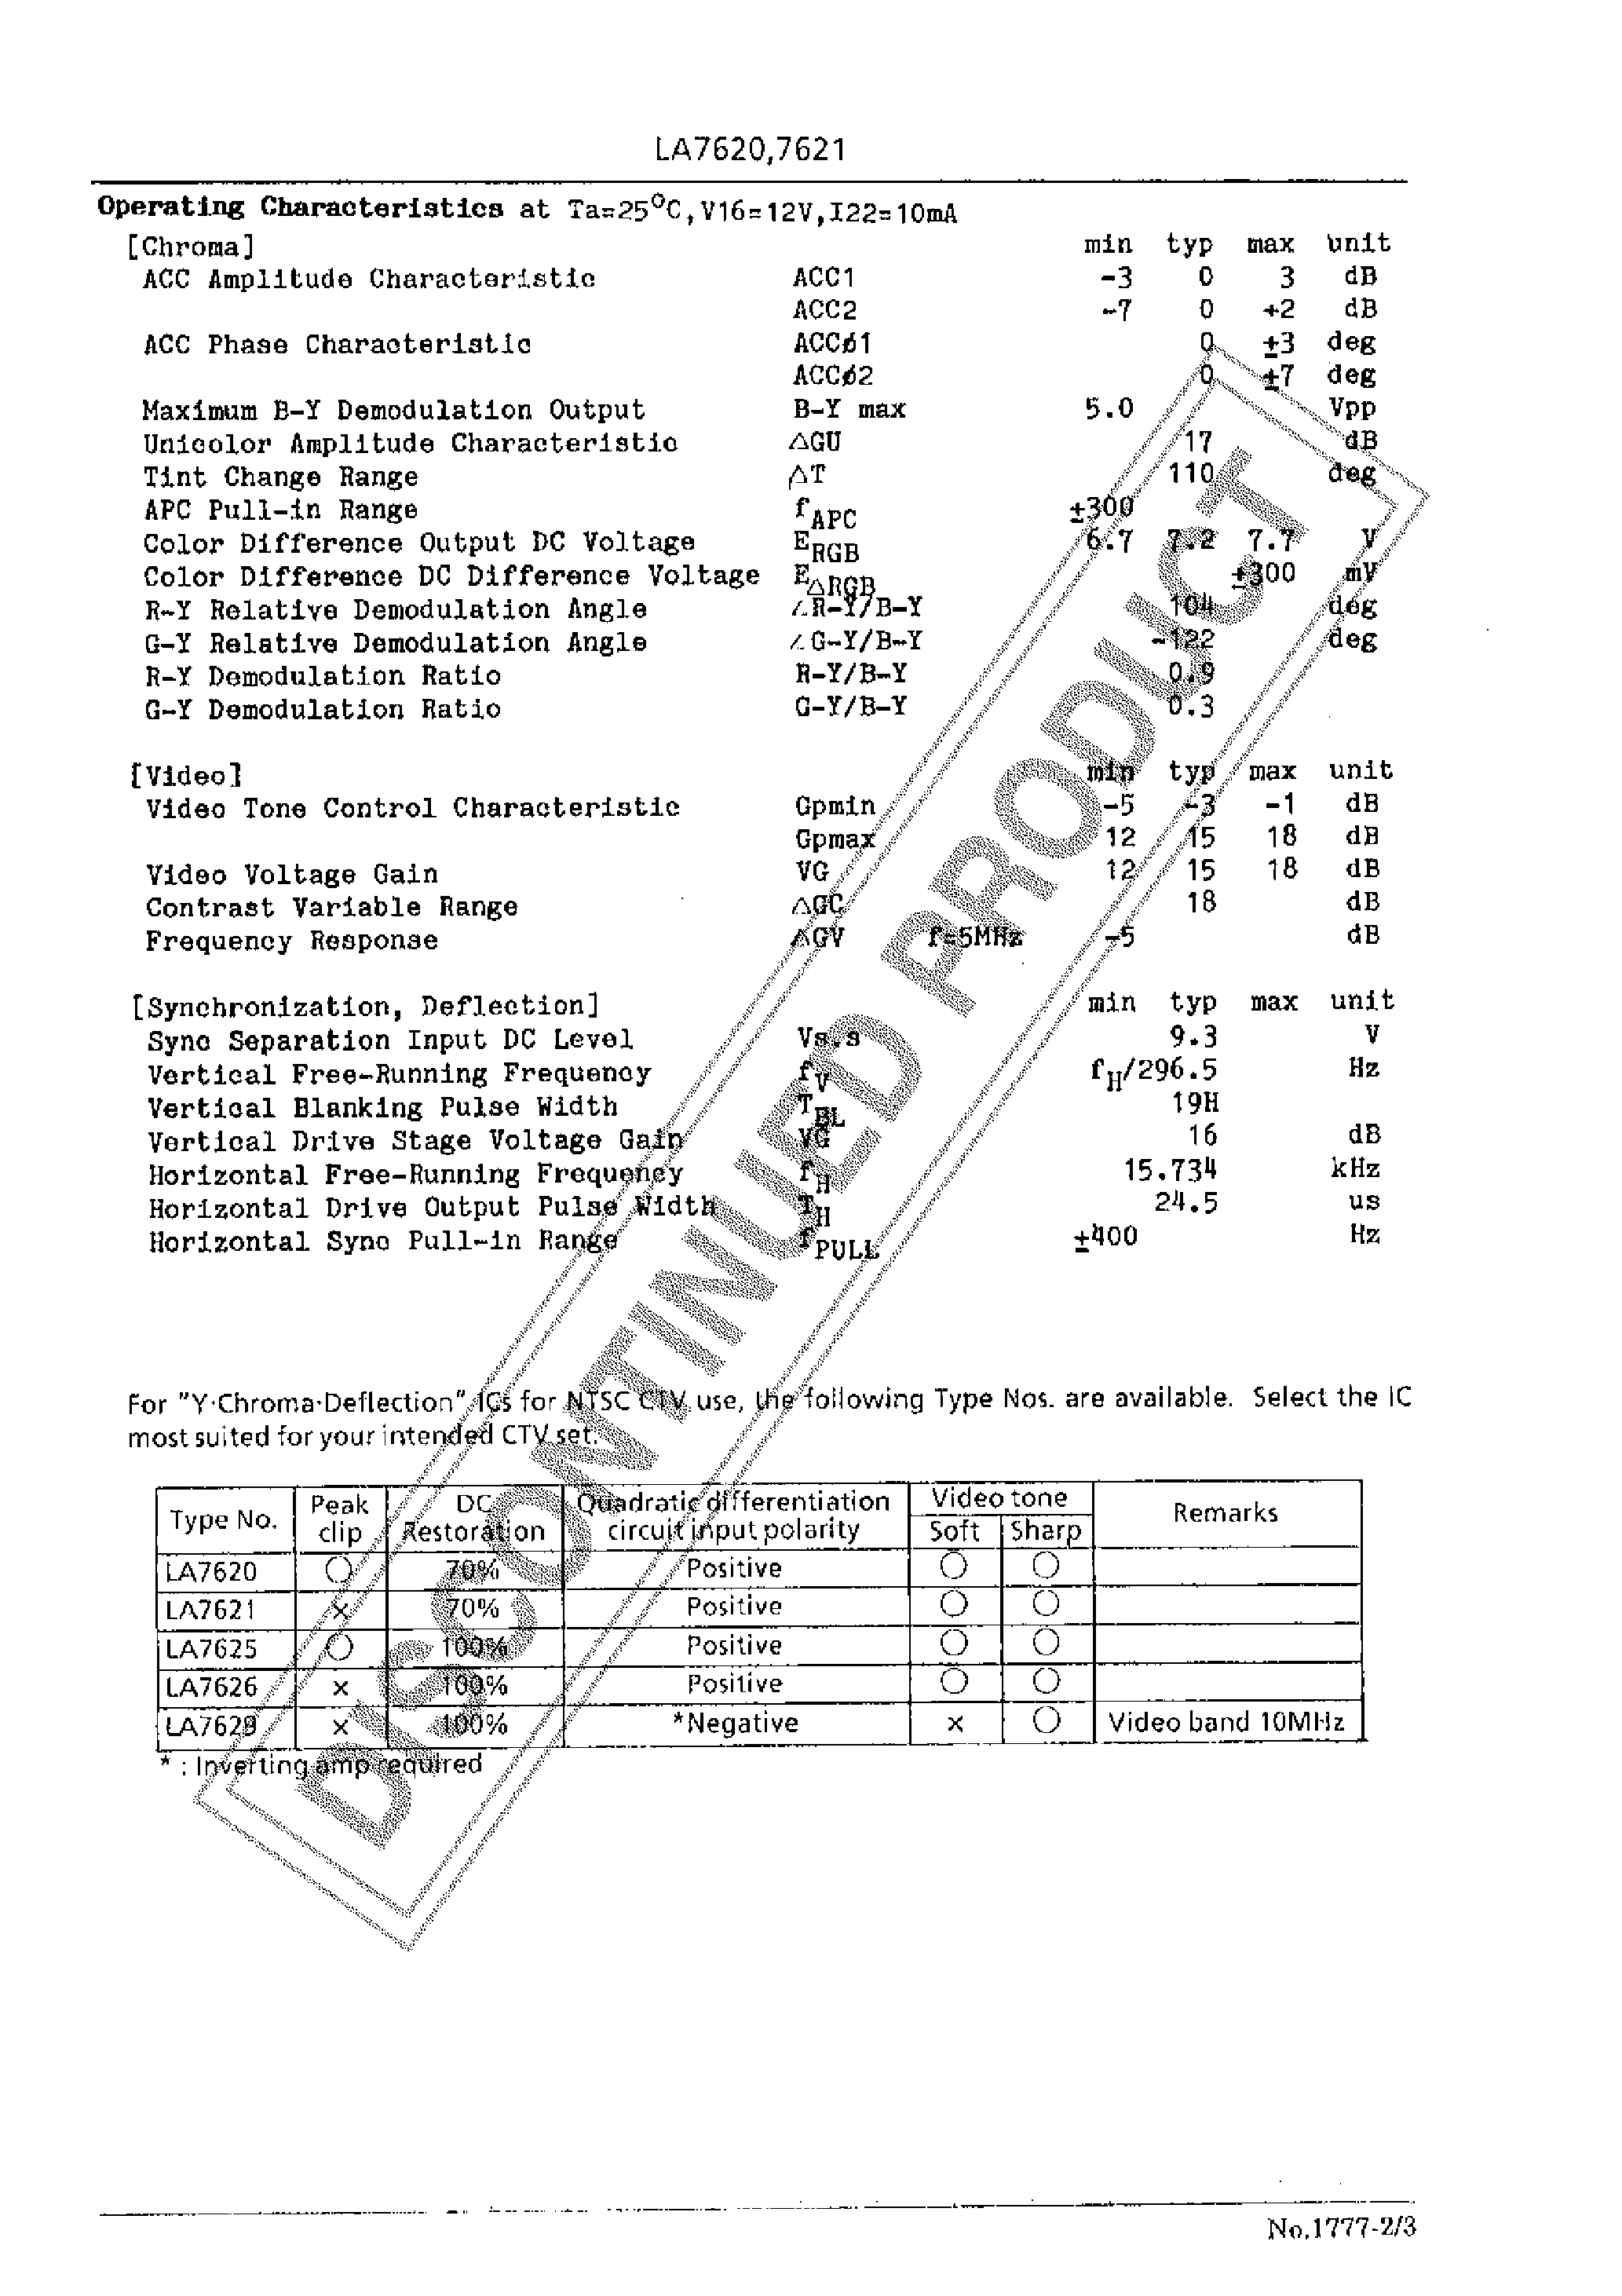 Datasheet LA7621 - Color TV Video / Chroma / Deflection Circuit page 2